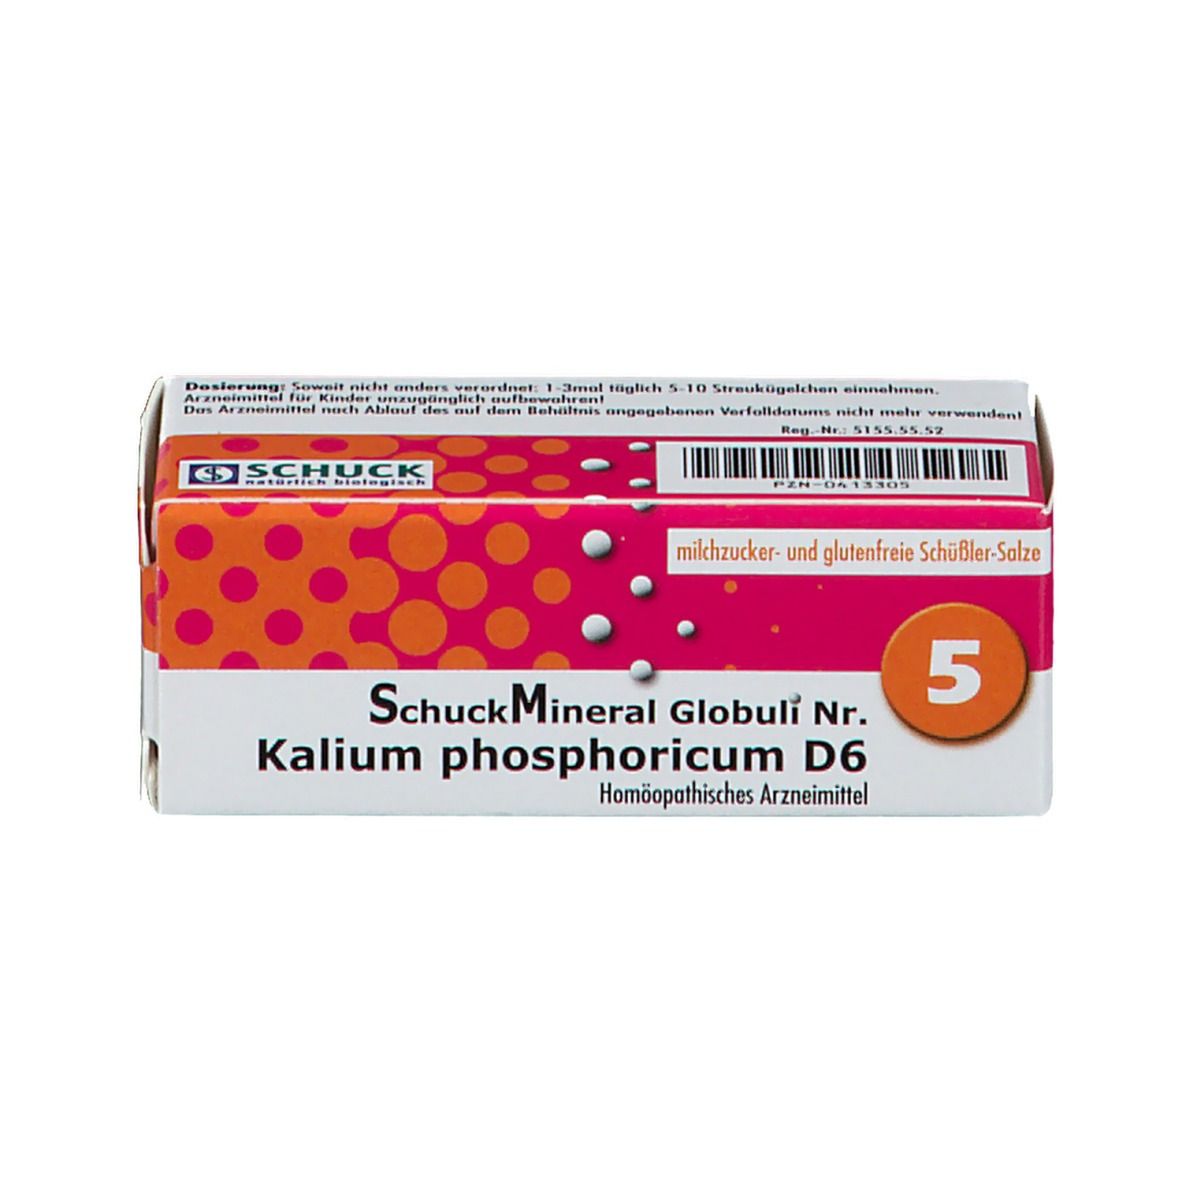 SchuckMineral Globuli Nr. 5 Kalium phosphoricum D6